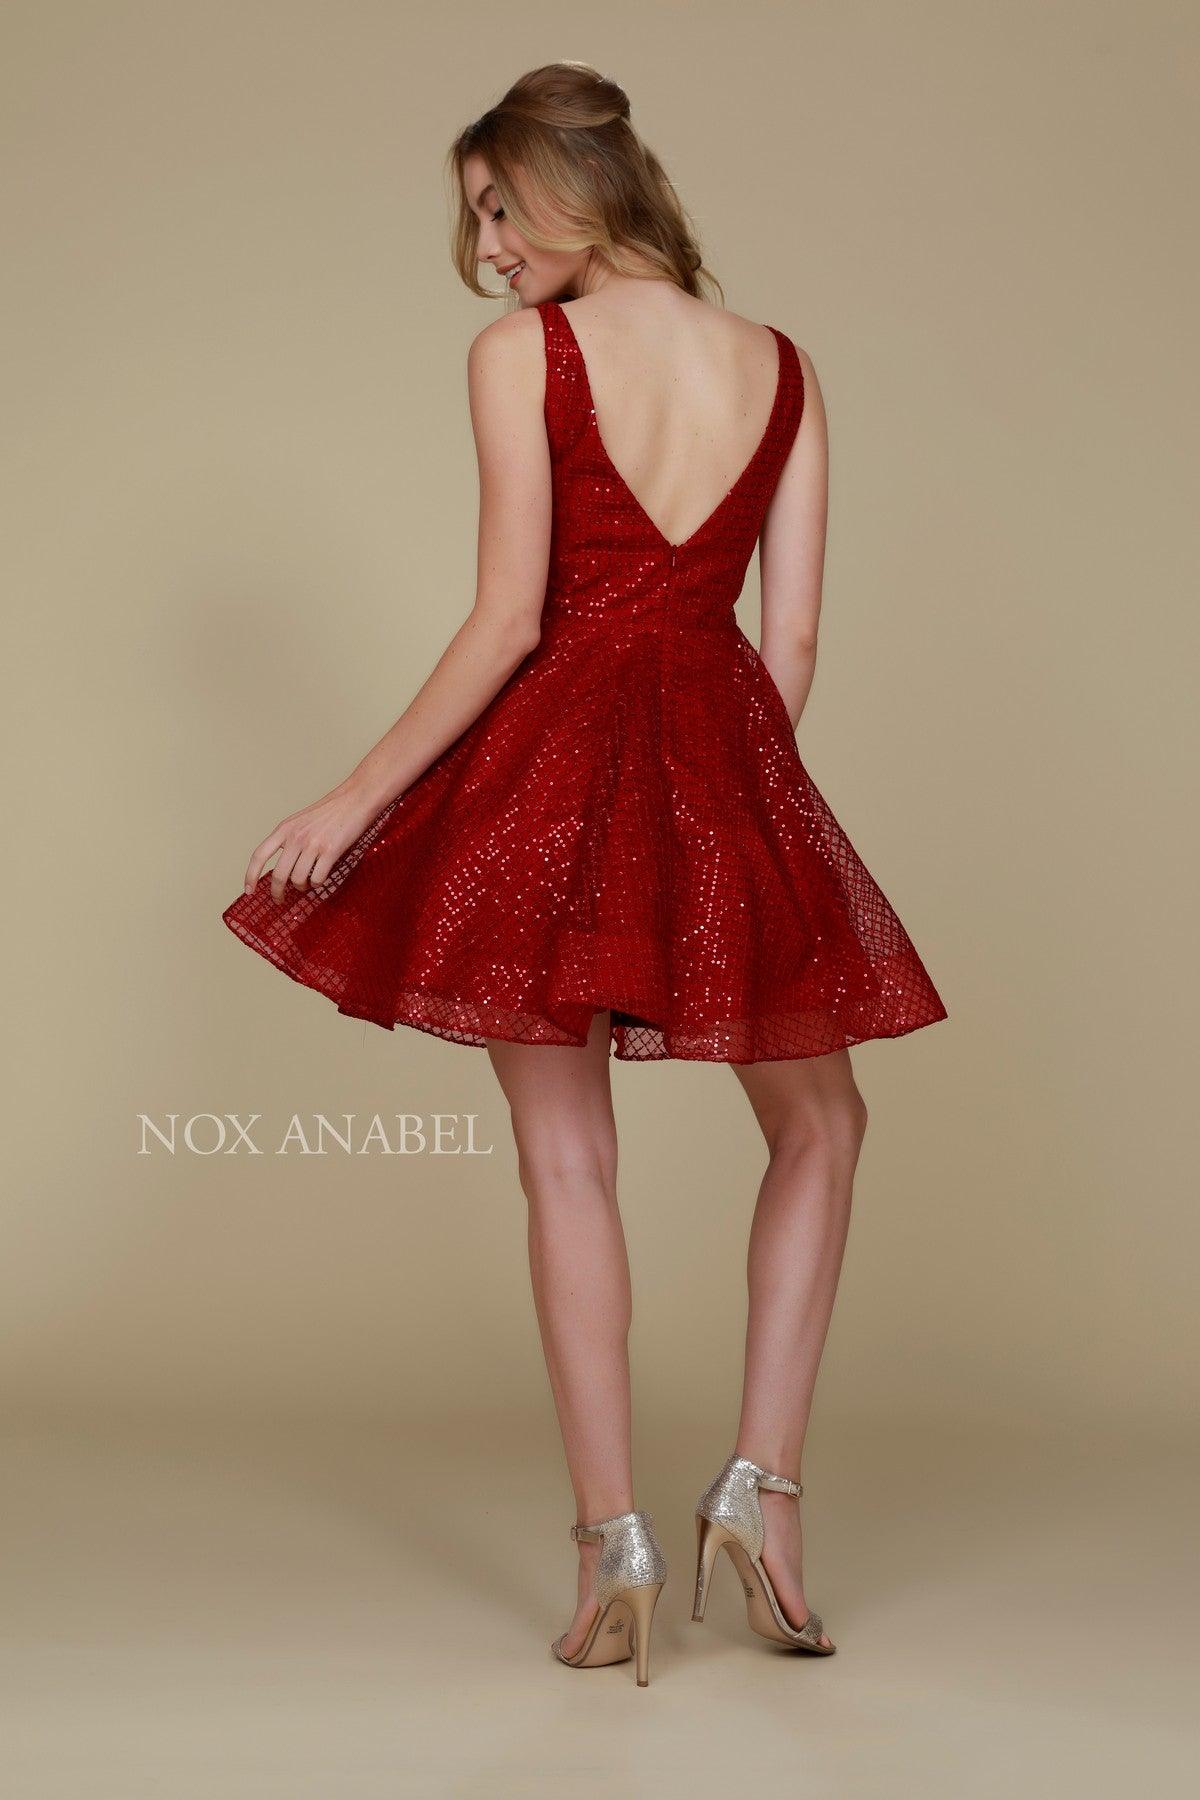 Prom Short Sleeveless Homecoming Glitter Dress - The Dress Outlet